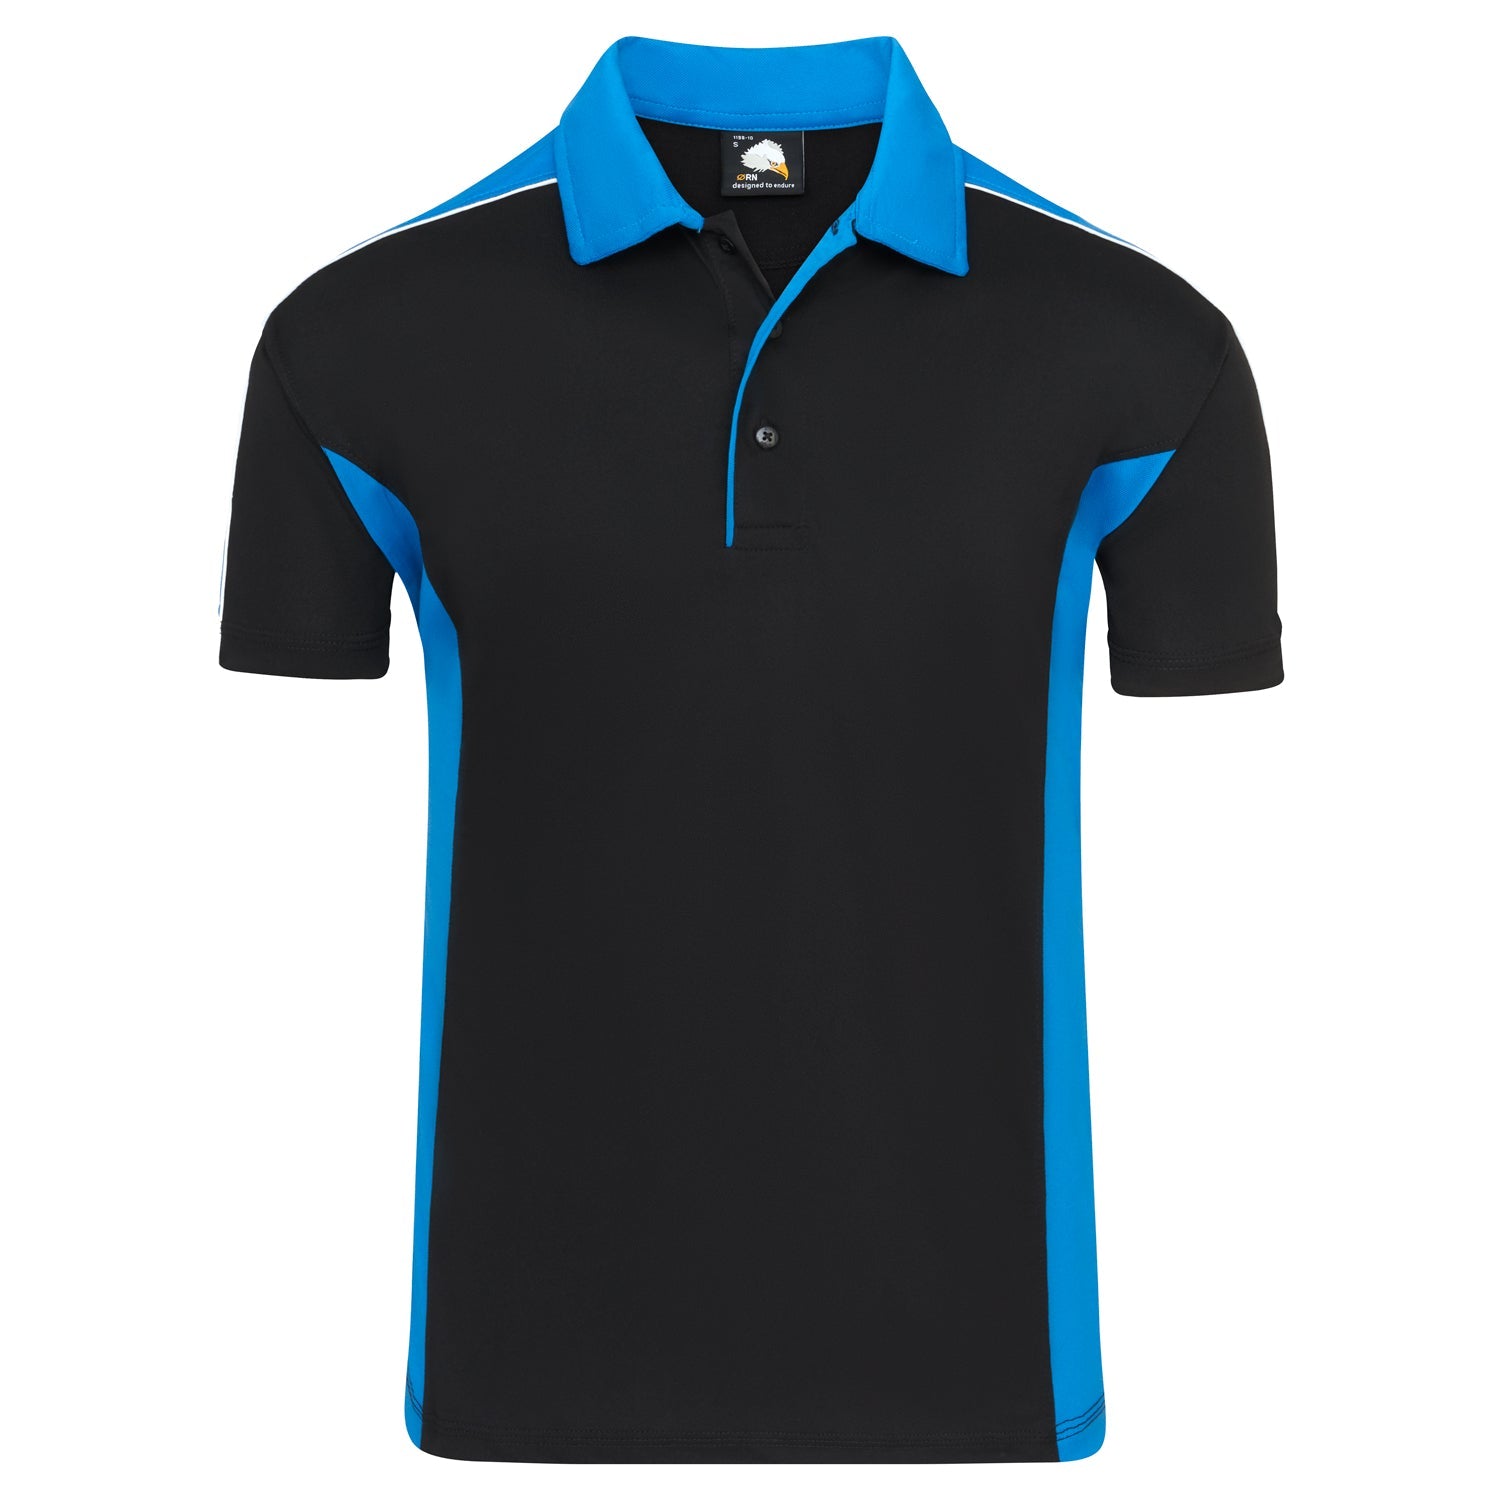 ORN Avocet Wicking Poloshirt - Black/Reflex Blue